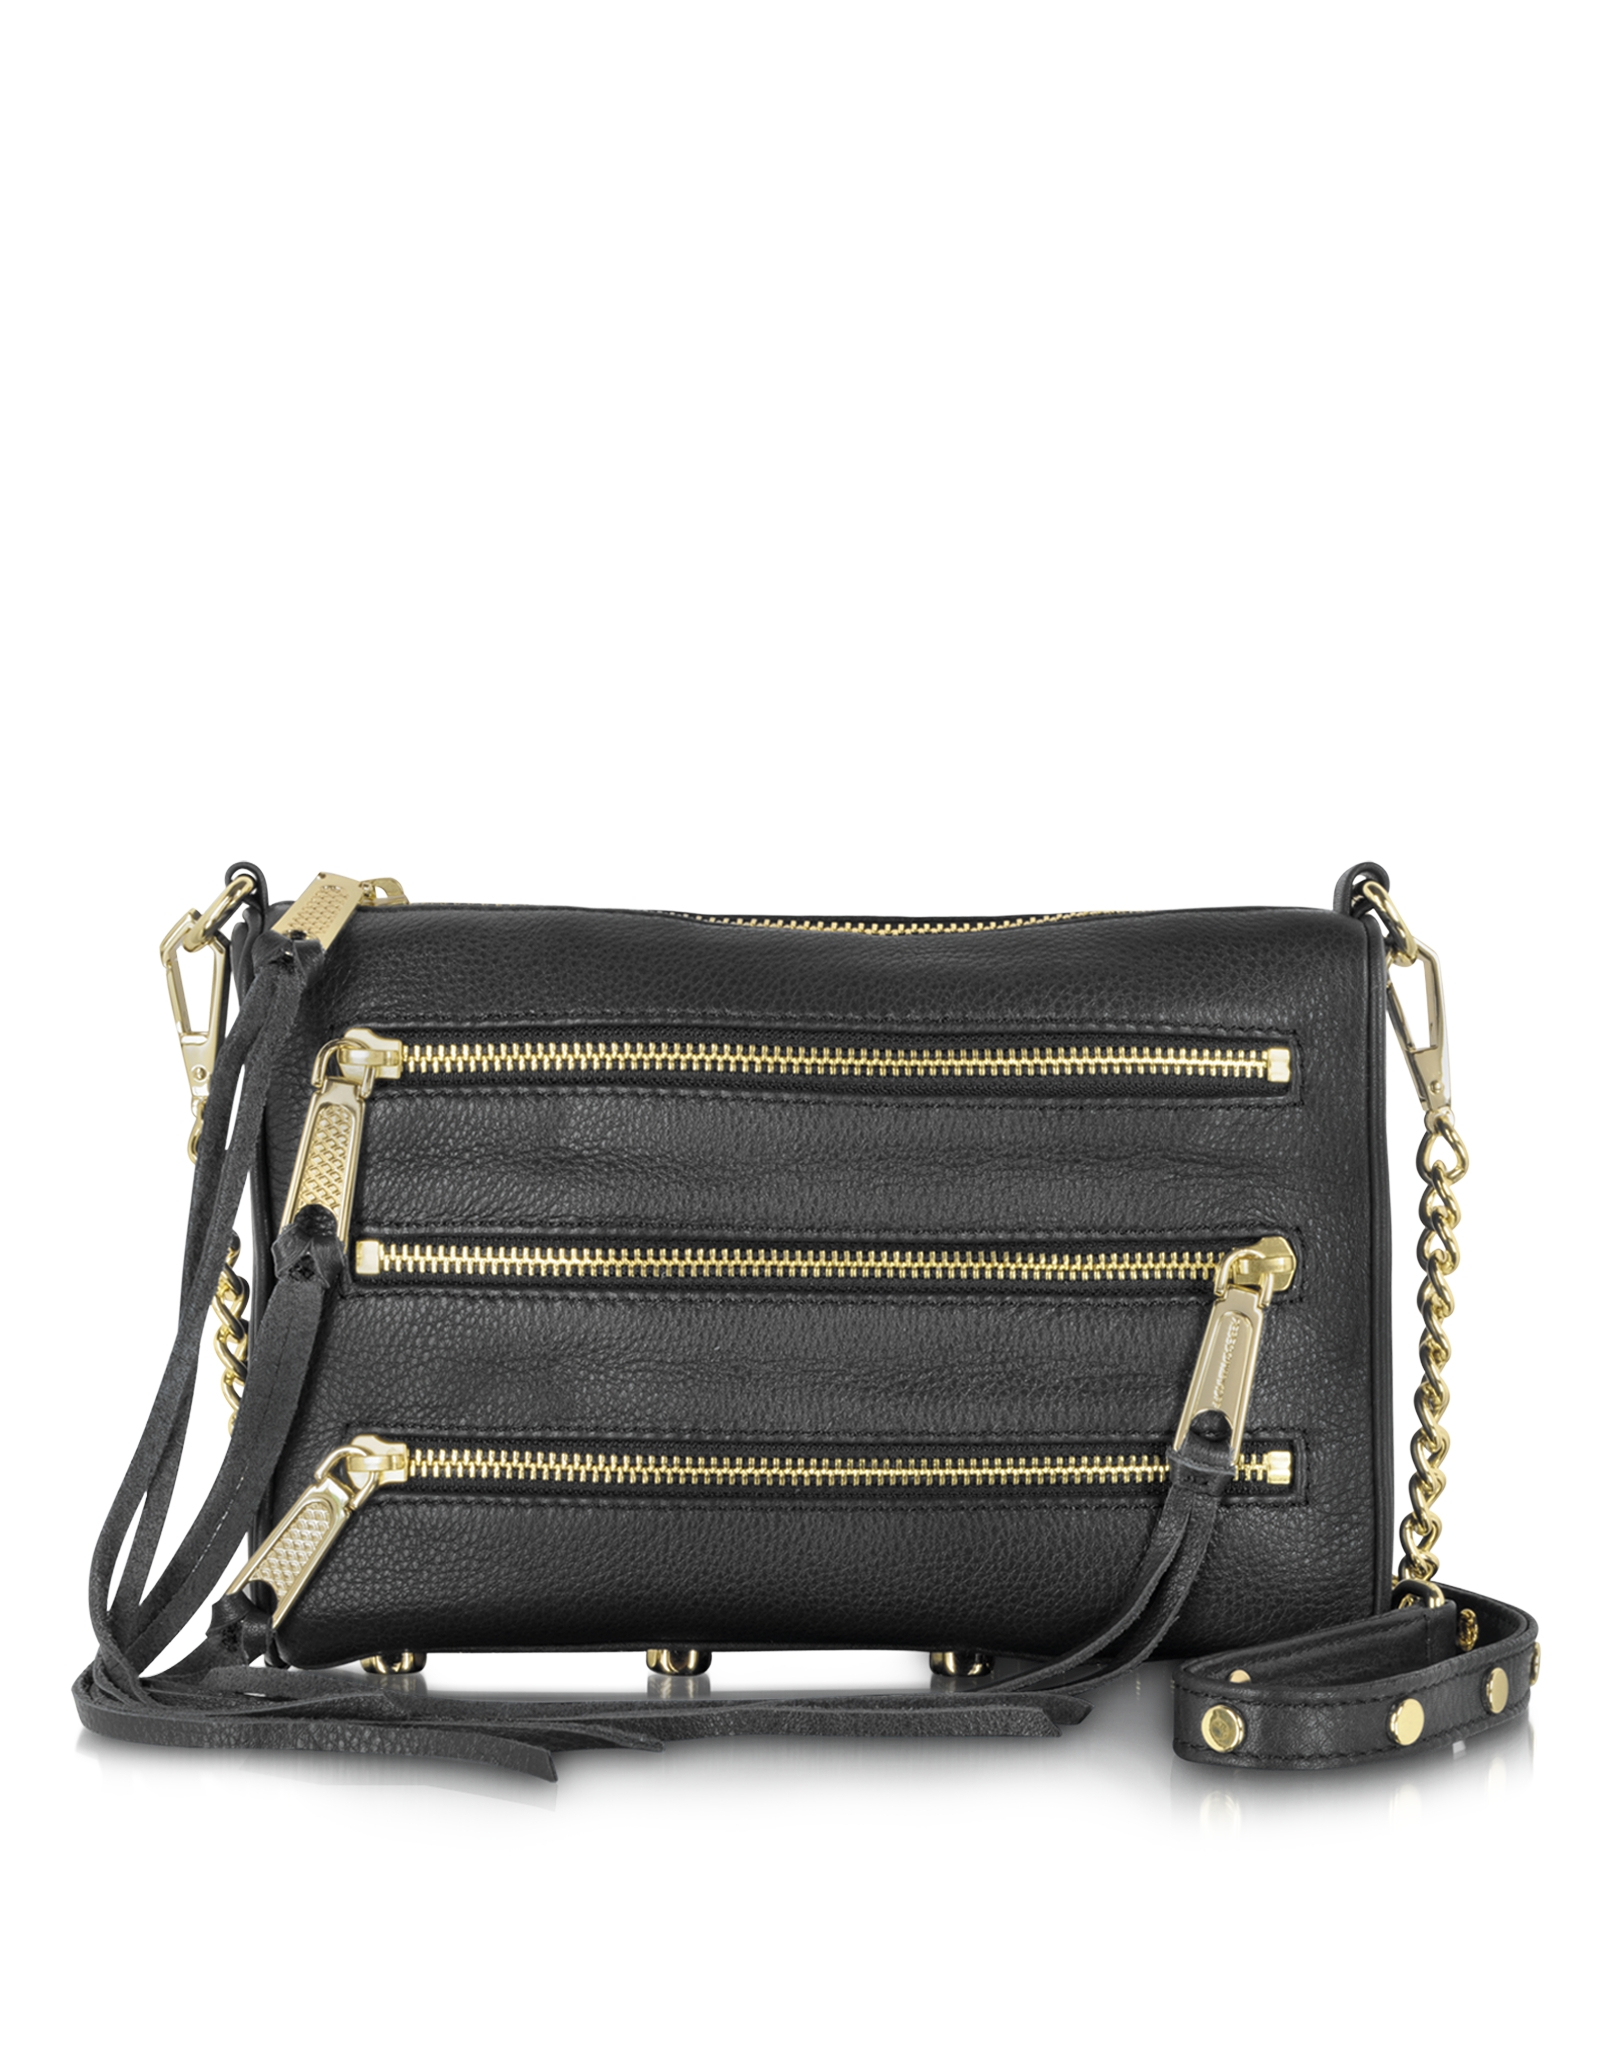 Lyst - Rebecca Minkoff Black Leather Mini 5 Zip Crossbody Bag in Black